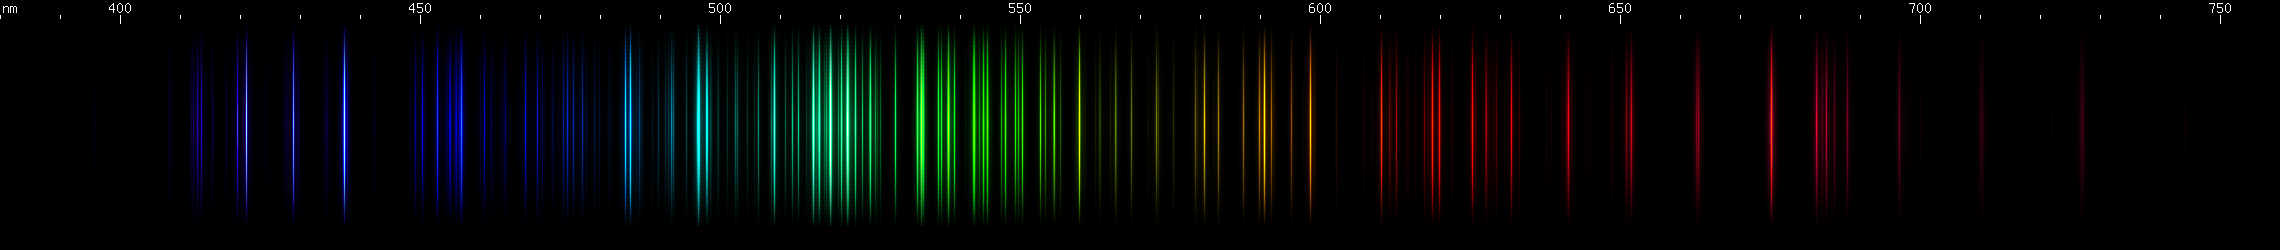 Spectral lines of Rhodium.